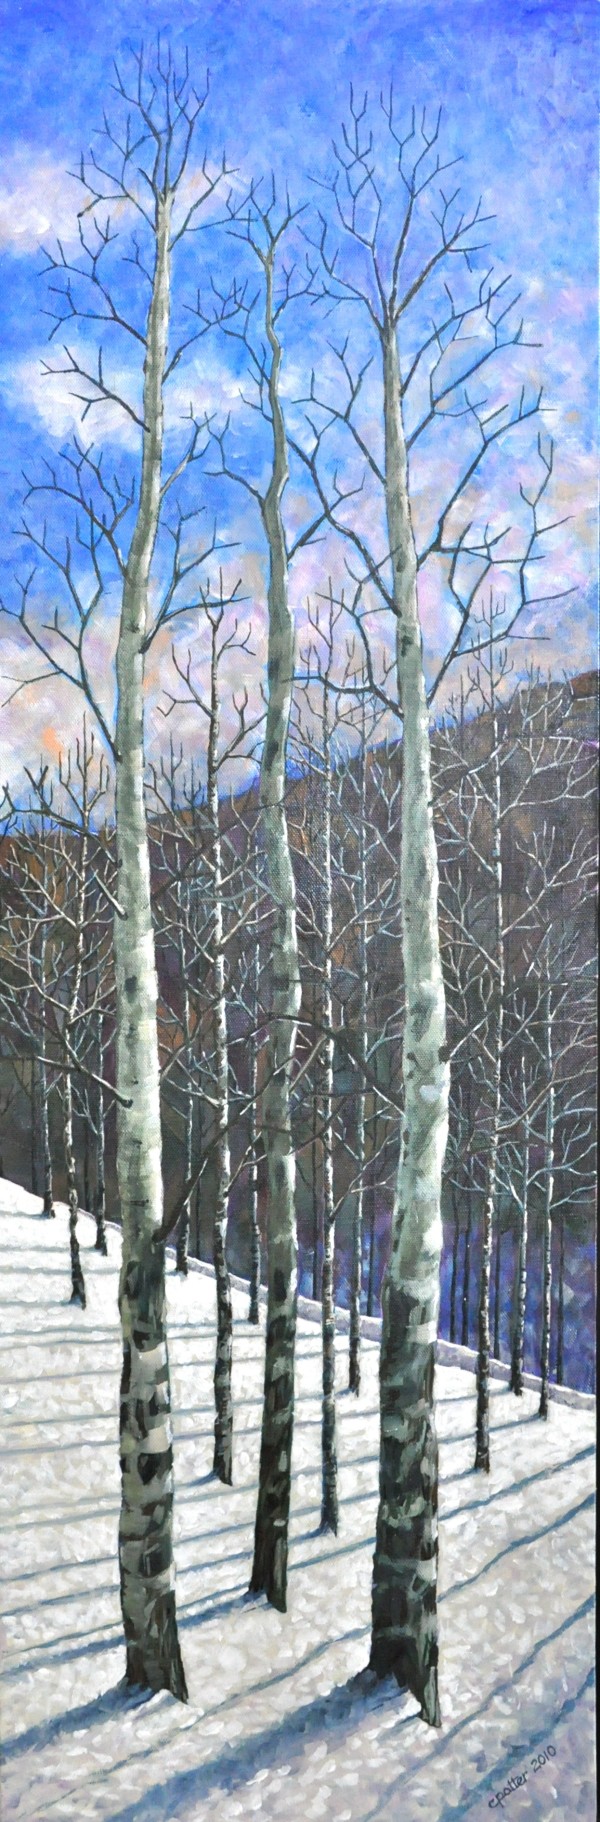 Poplars by Cheryl Potter